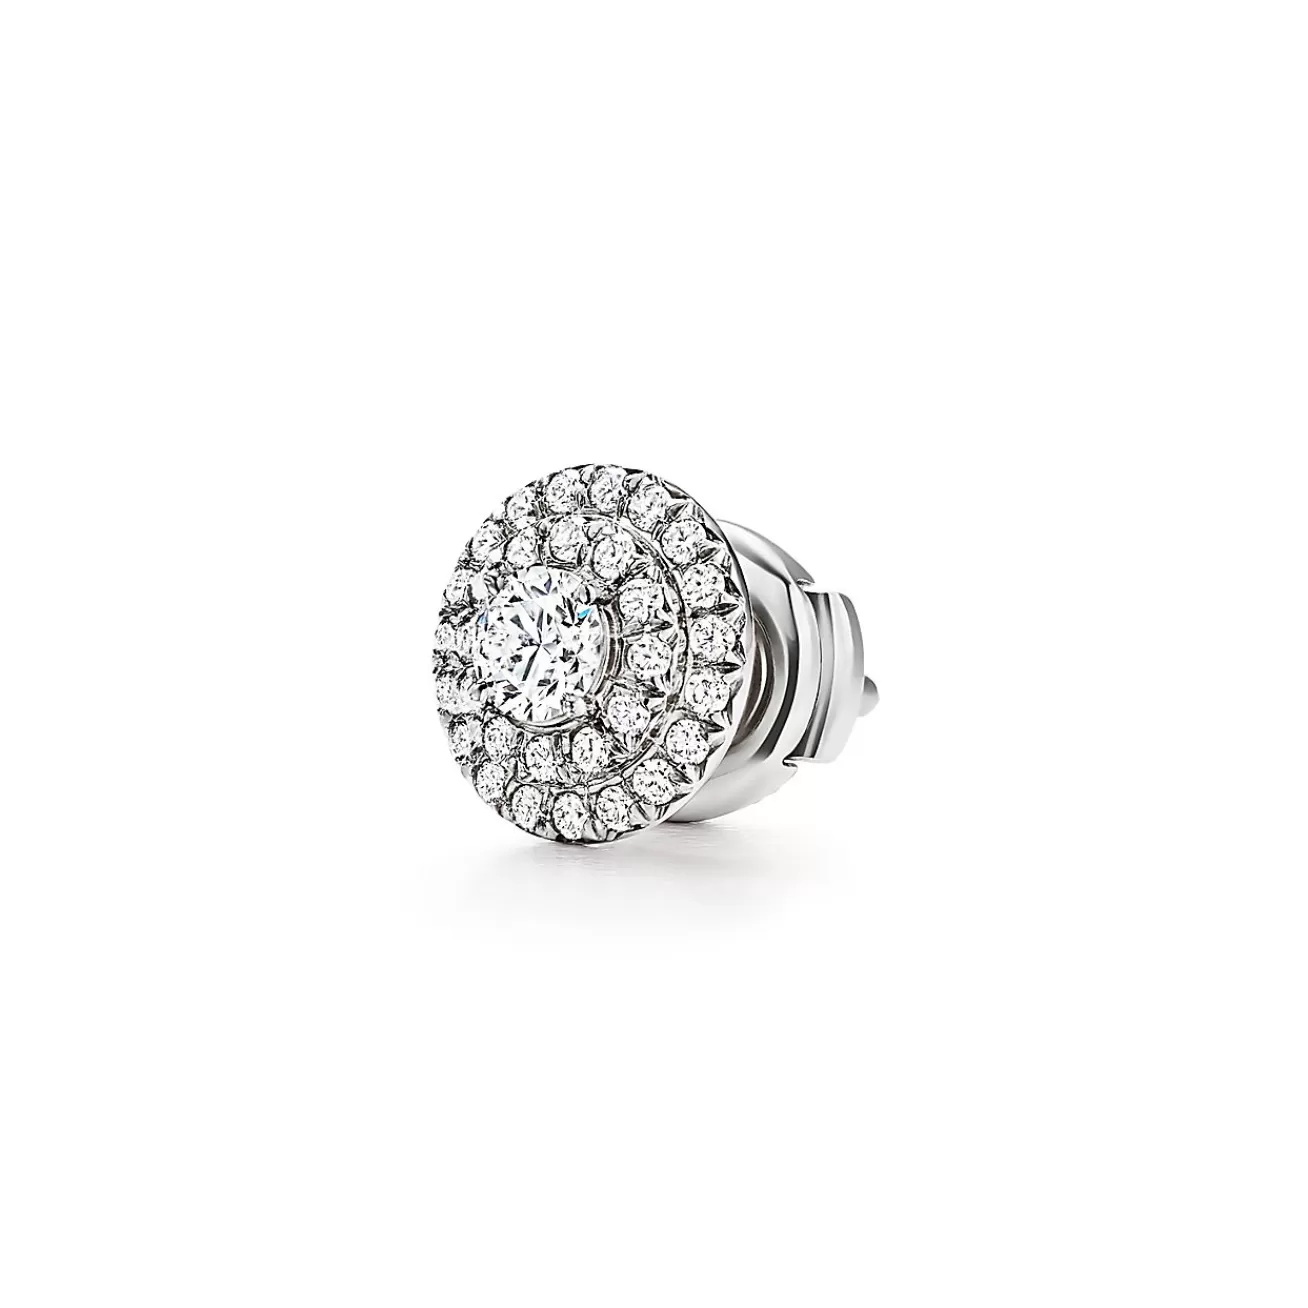 Tiffany & Co. Tiffany Soleste® earrings in platinum with round brilliant diamonds. | ^ Earrings | Dainty Jewelry